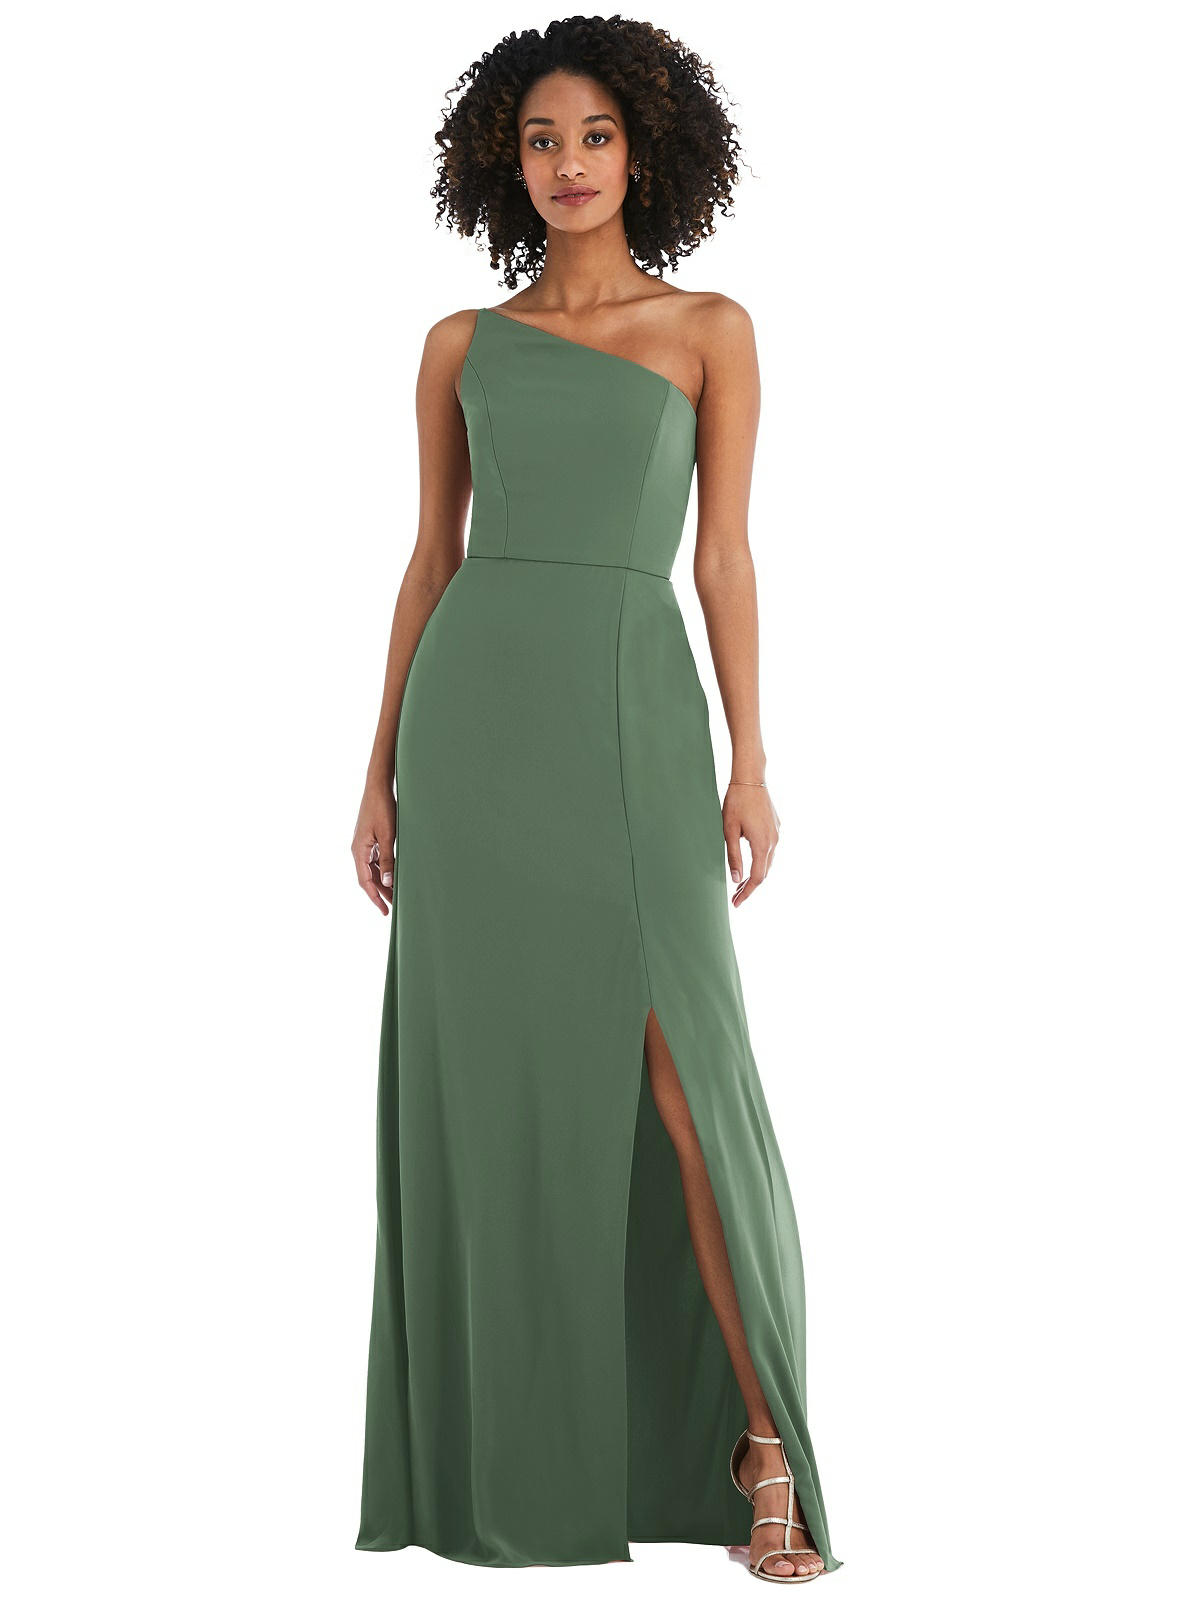 Aime Vineyard Green Bridesmaid Dress by Dessy